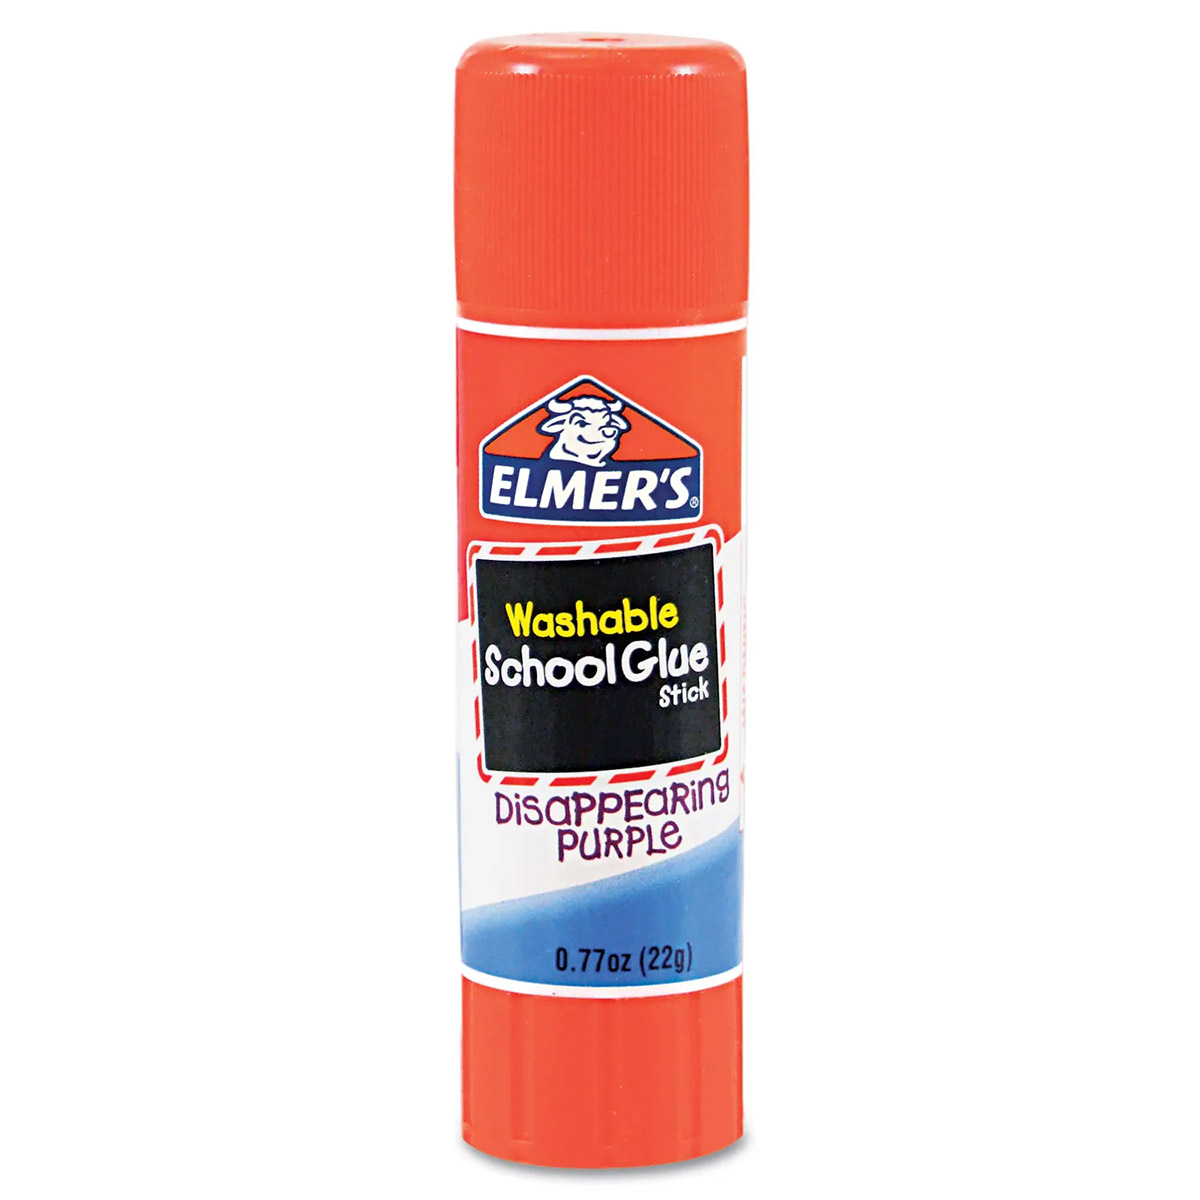 Acid Free Glue Stick • PAPER SCISSORS STONE